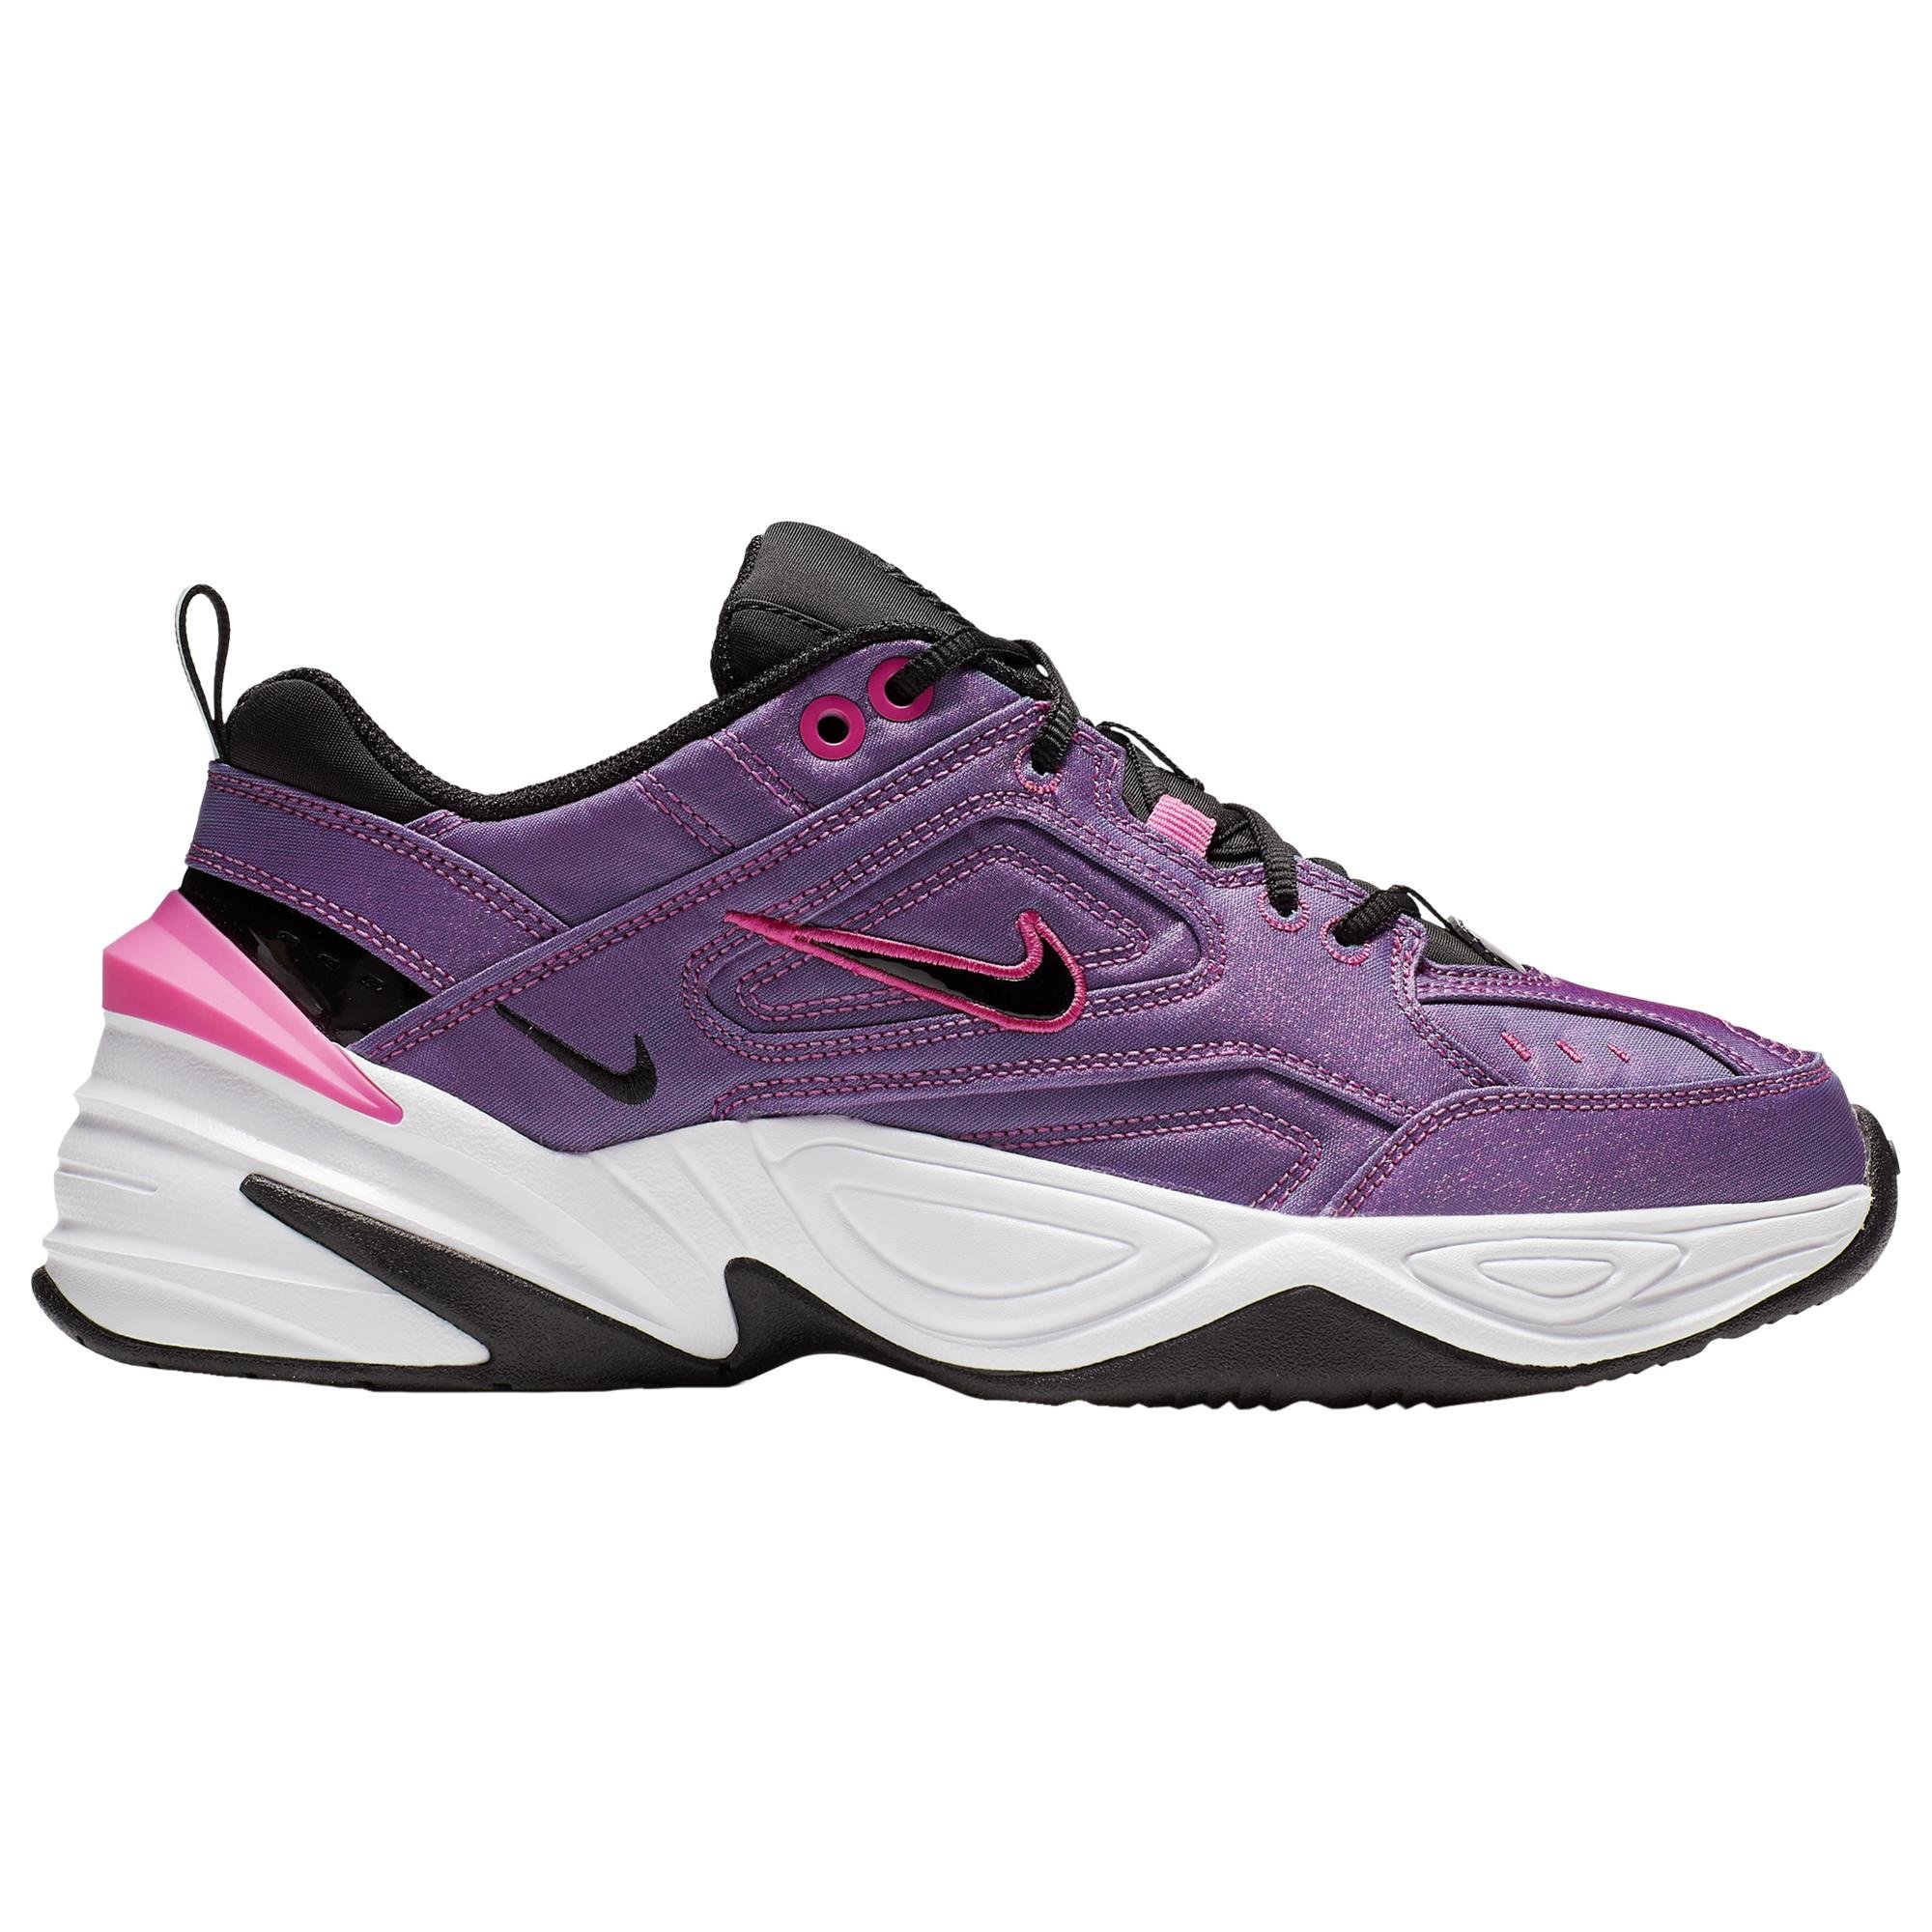 Nike Rubber M2k Tekno Se Shoe in Purple - Save 58% - Lyst